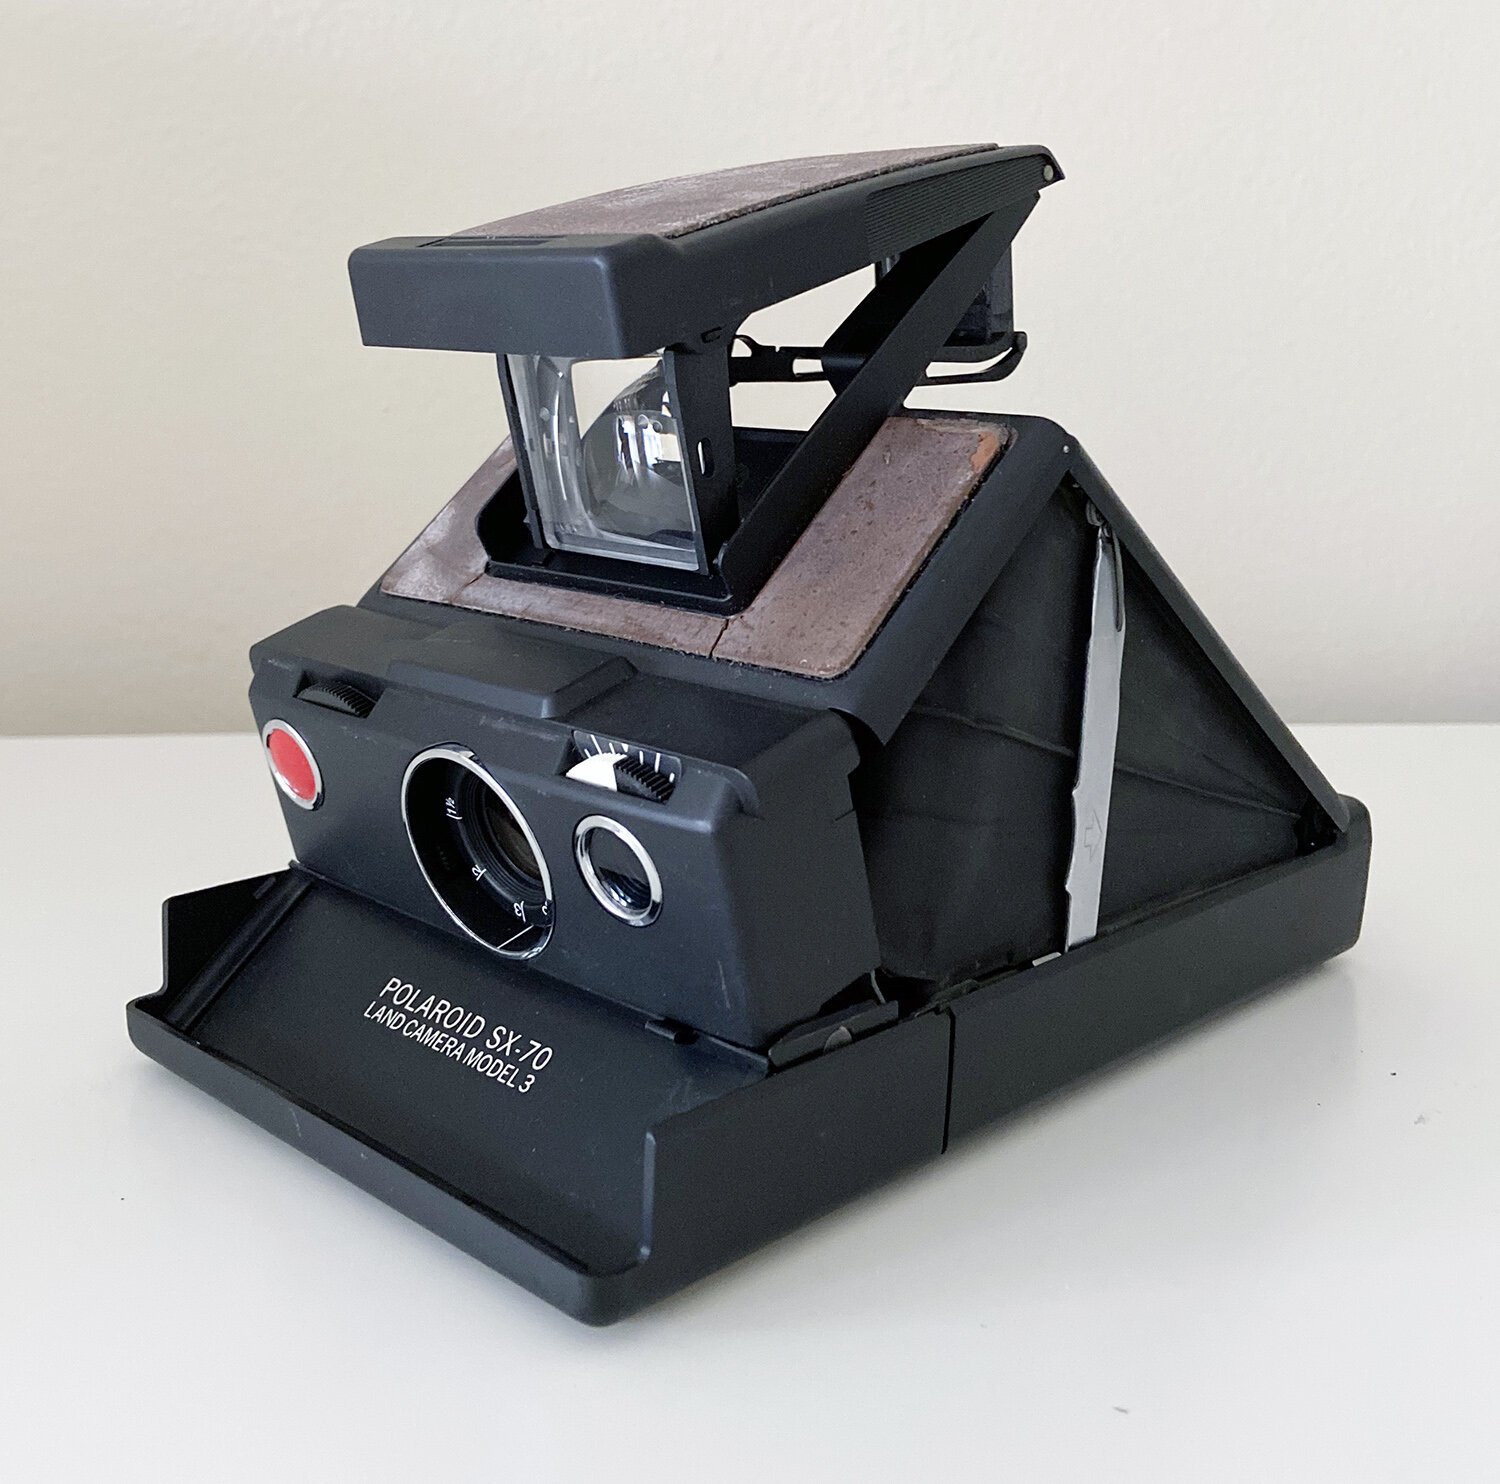 polaroid introduces the polaroid go — the world's smallest analog